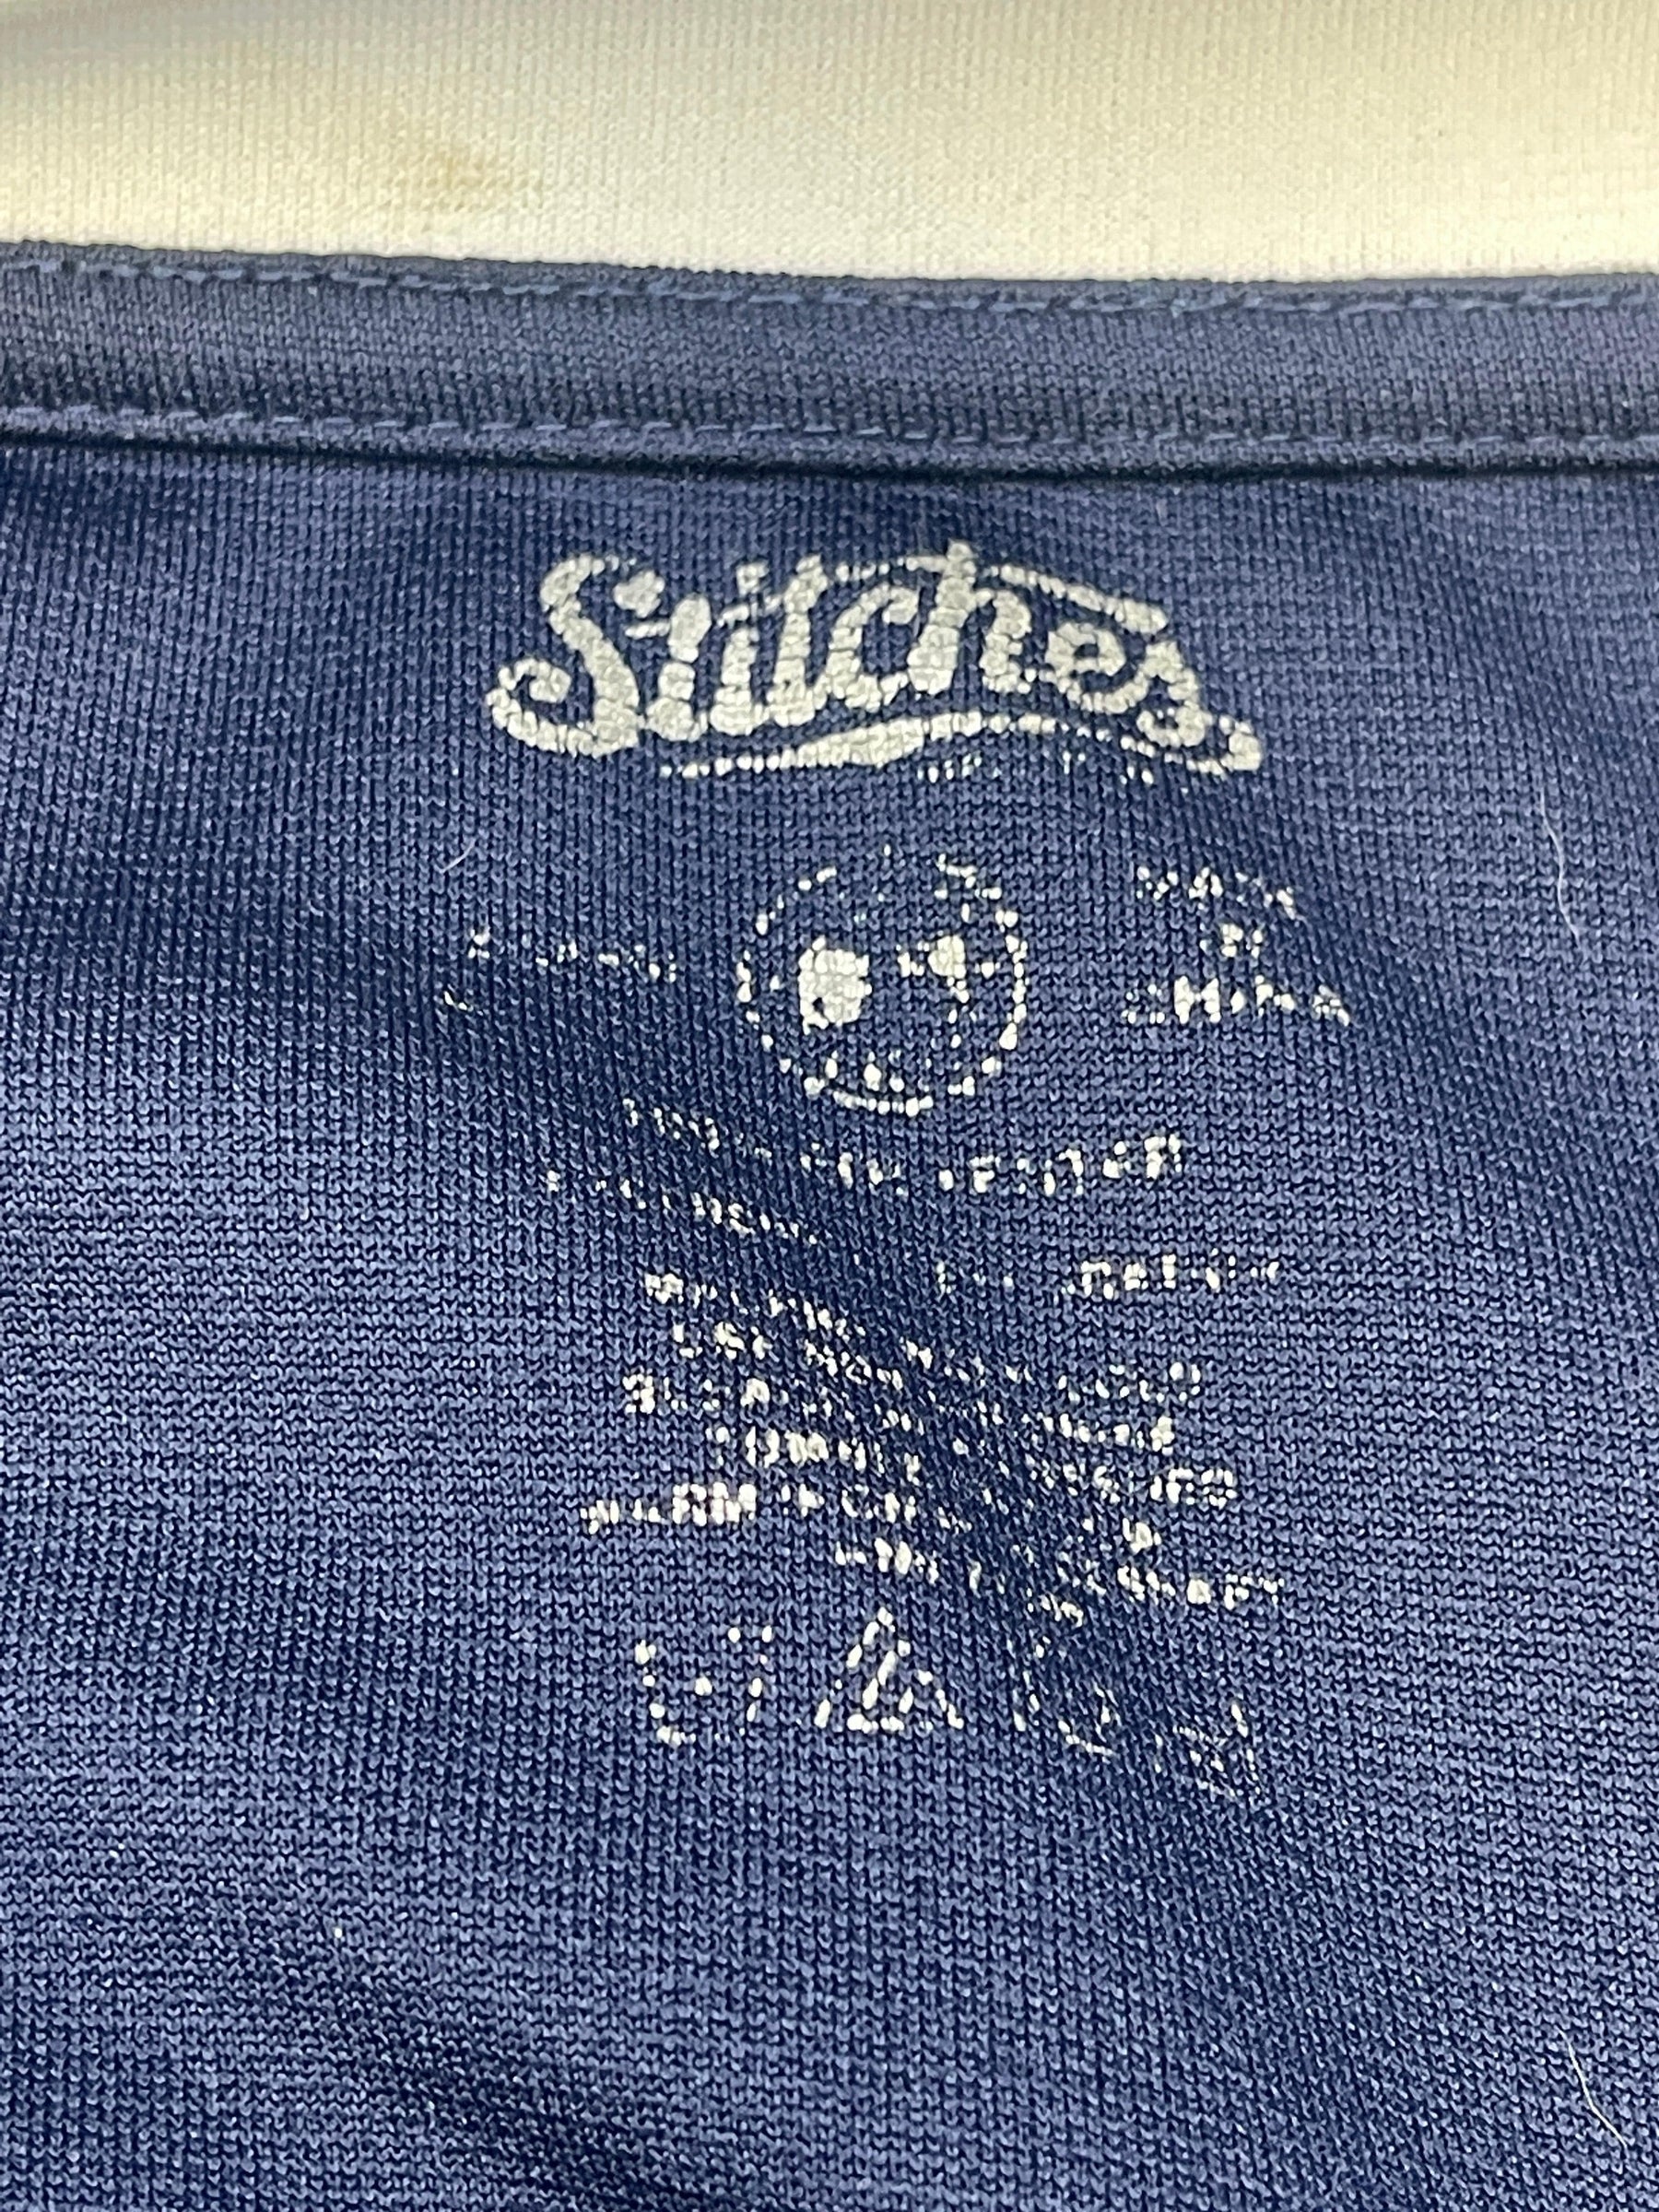 MLB New York Yankees Stitches Full Zip Stitched Track Jacket Men's X-Large